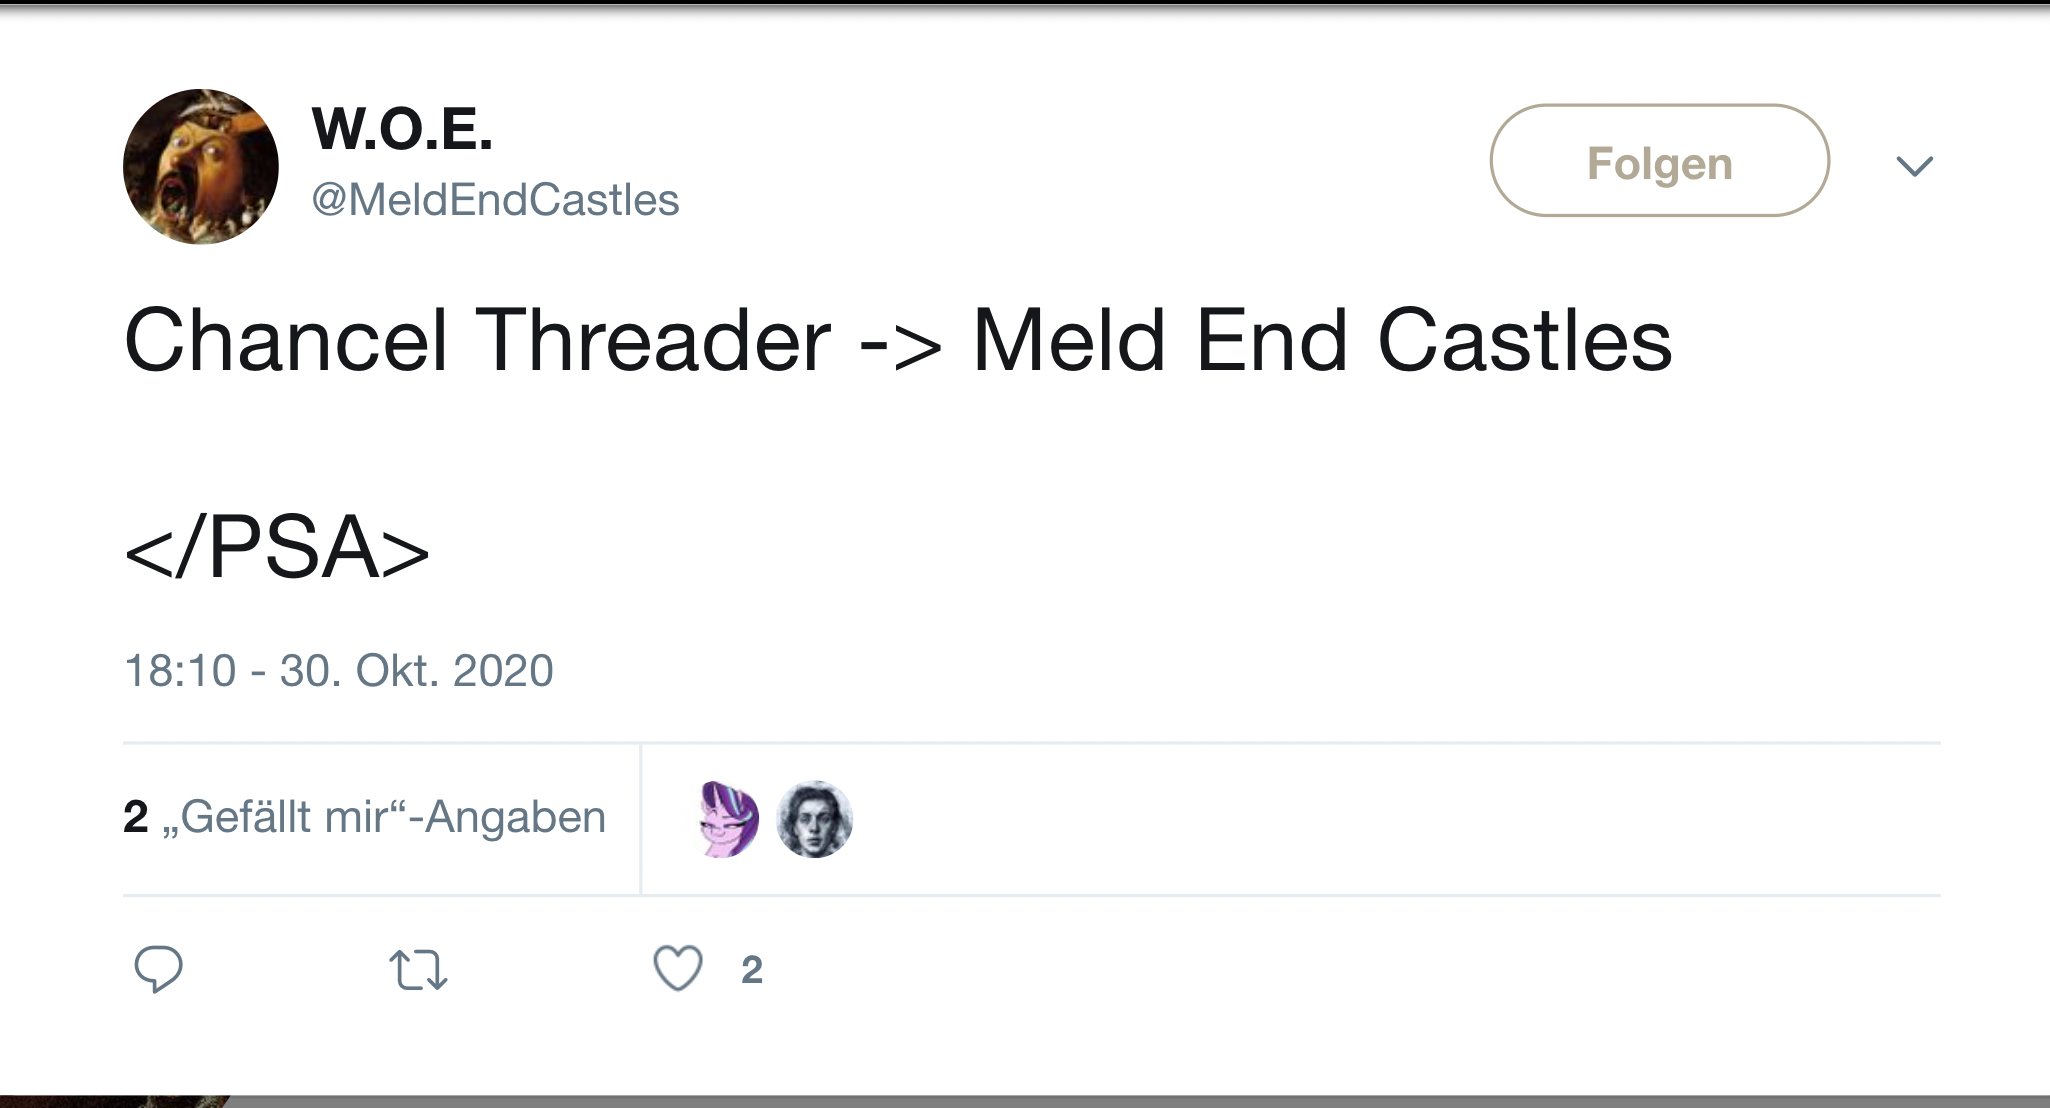 Woe tweets from @meldendcastles: Chancel Threader -> Meld End Castles </PSA> on october 30, 2020.